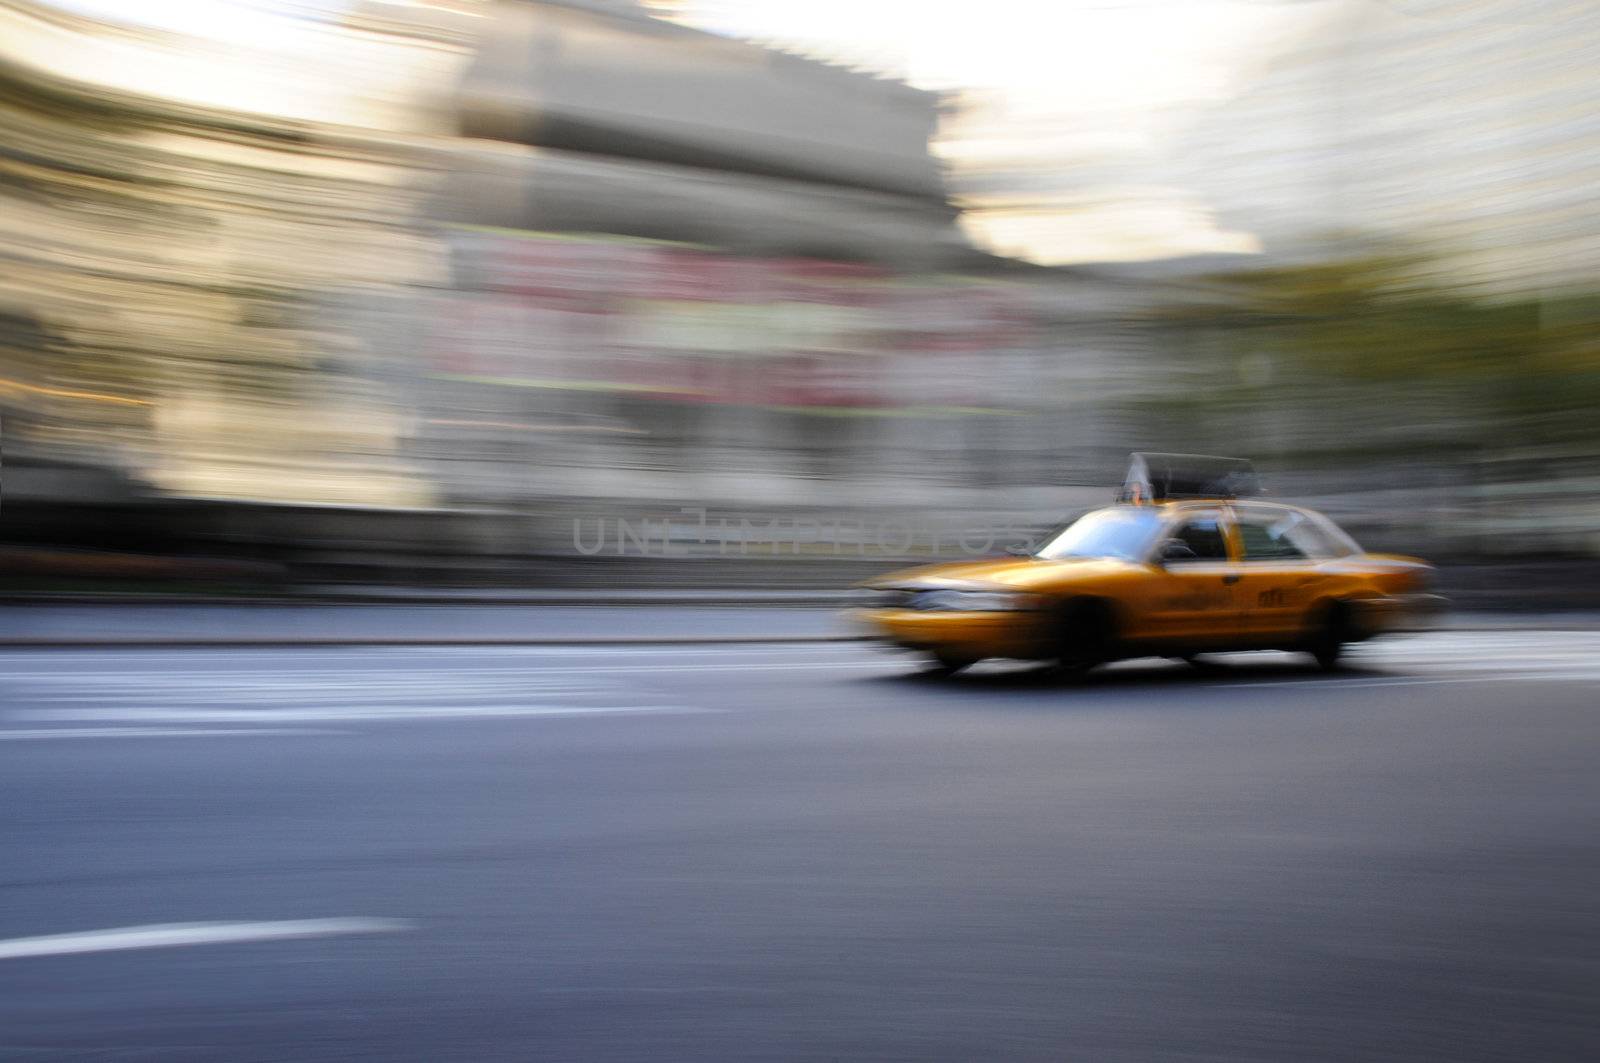 Taxi cab speeding down an urban street in a blur during the daytime